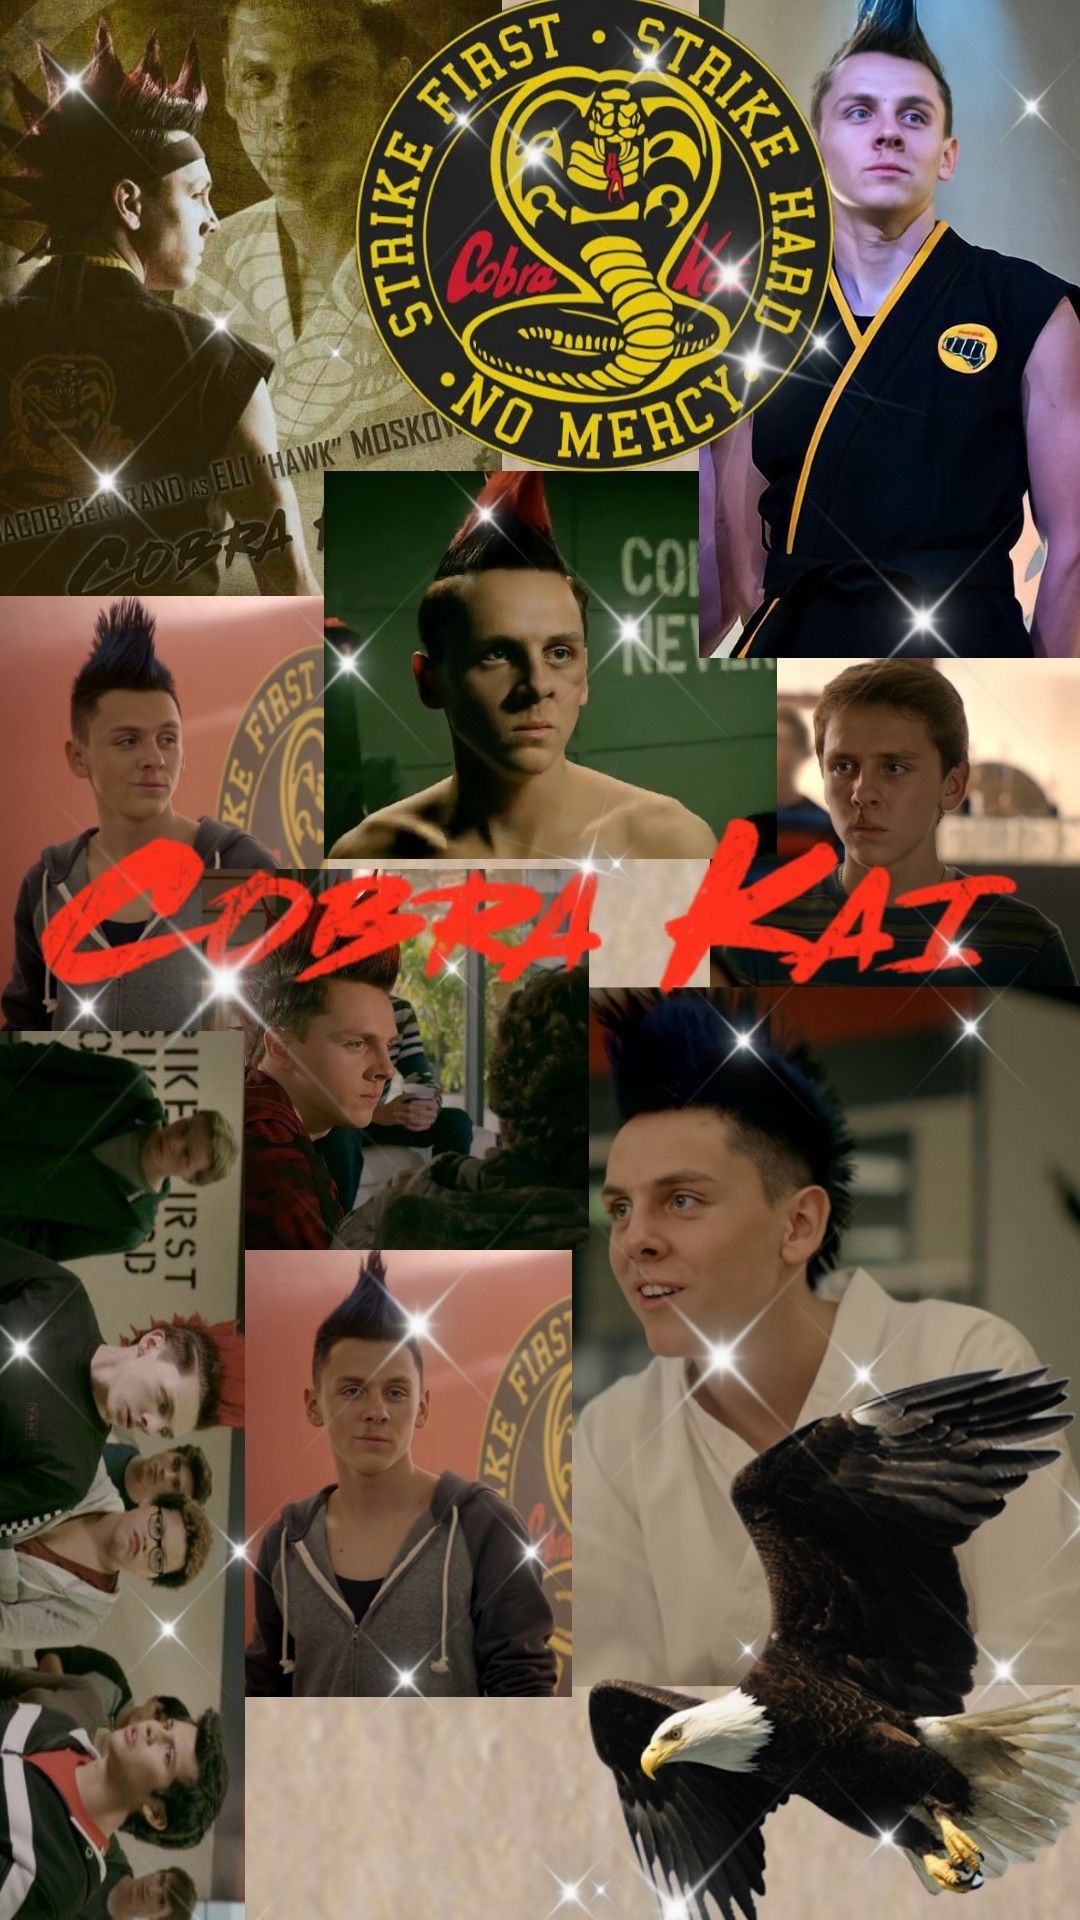 Cobra Kai 2020 Wallpapers